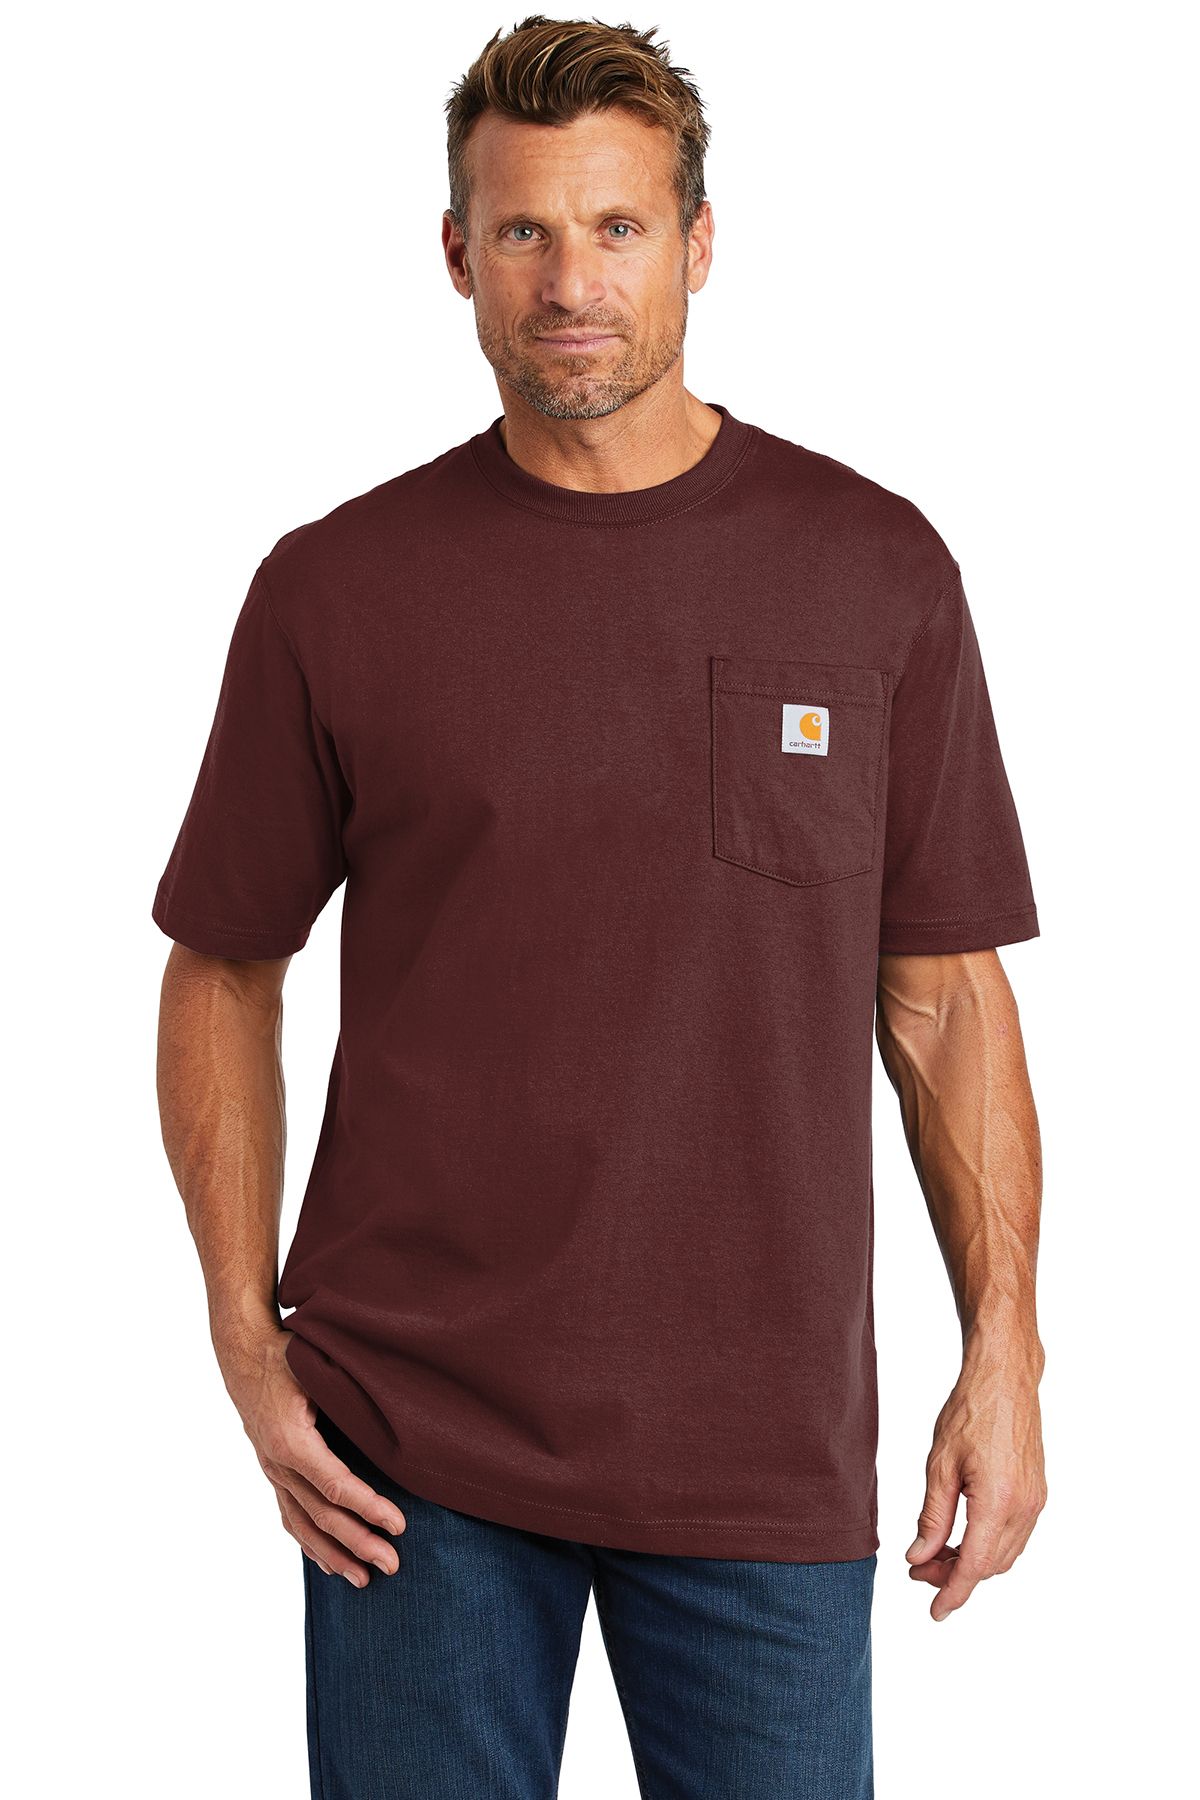 Carhartt Workwear Pocket Short Sleeve T-Shirt CTK87 - Tiny Fish Printing